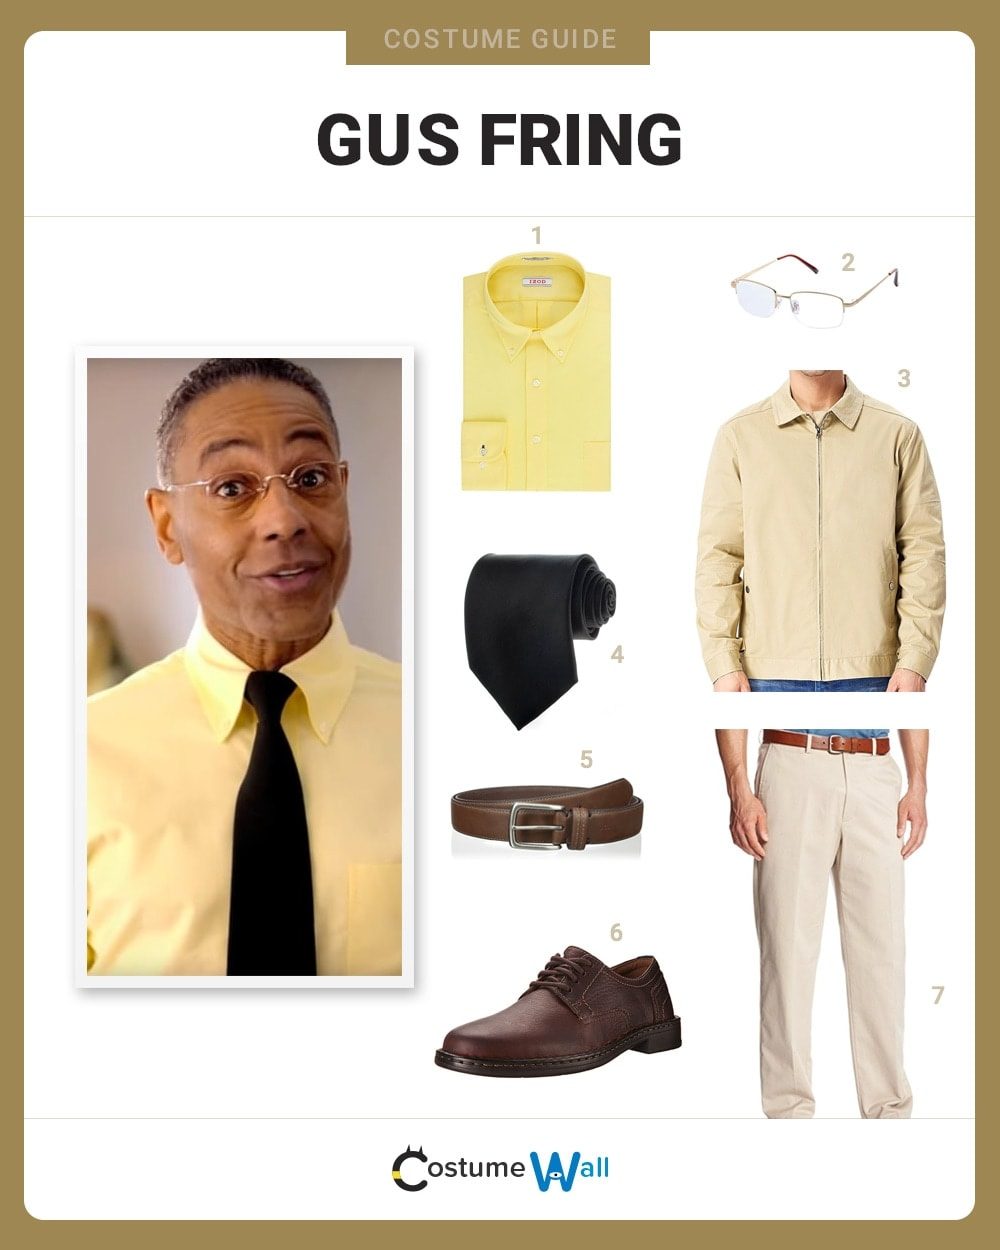 Gus fring costume